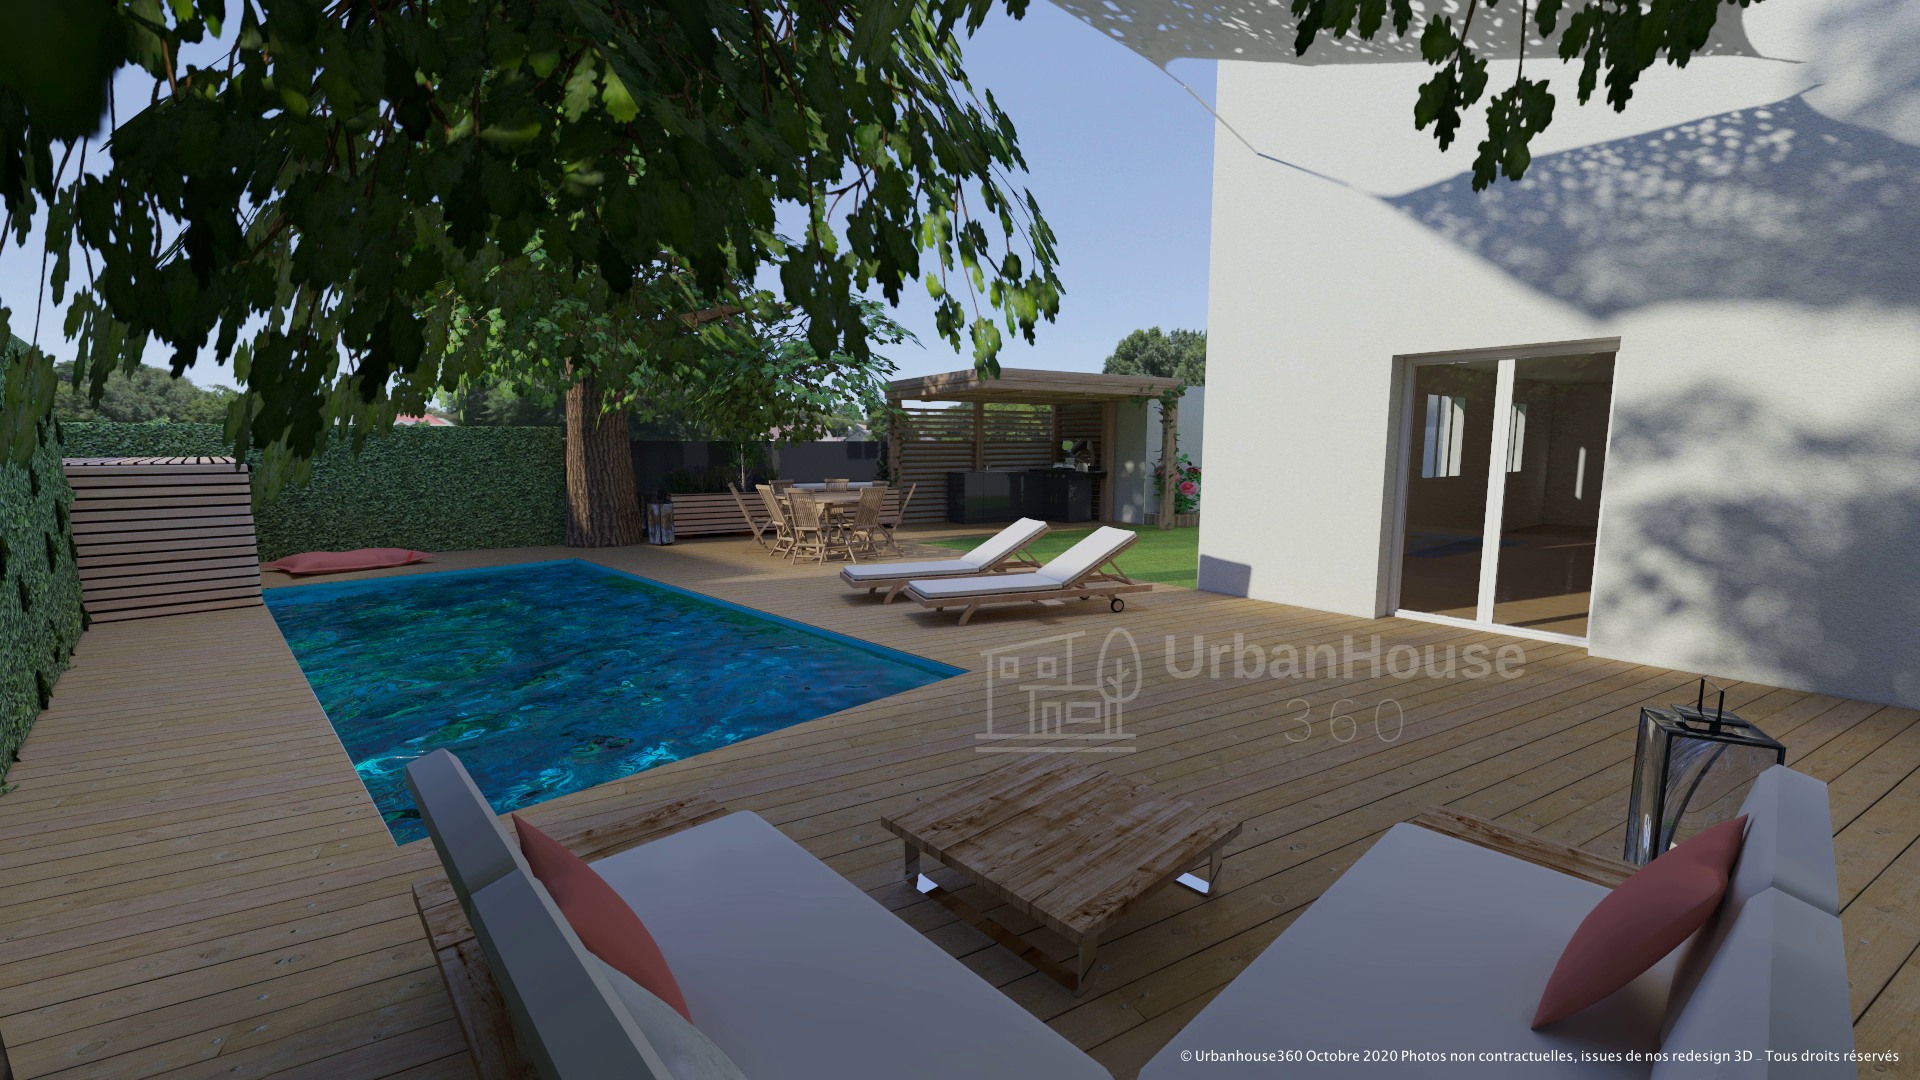 Urbanhouse360-laCostaPavada-3D